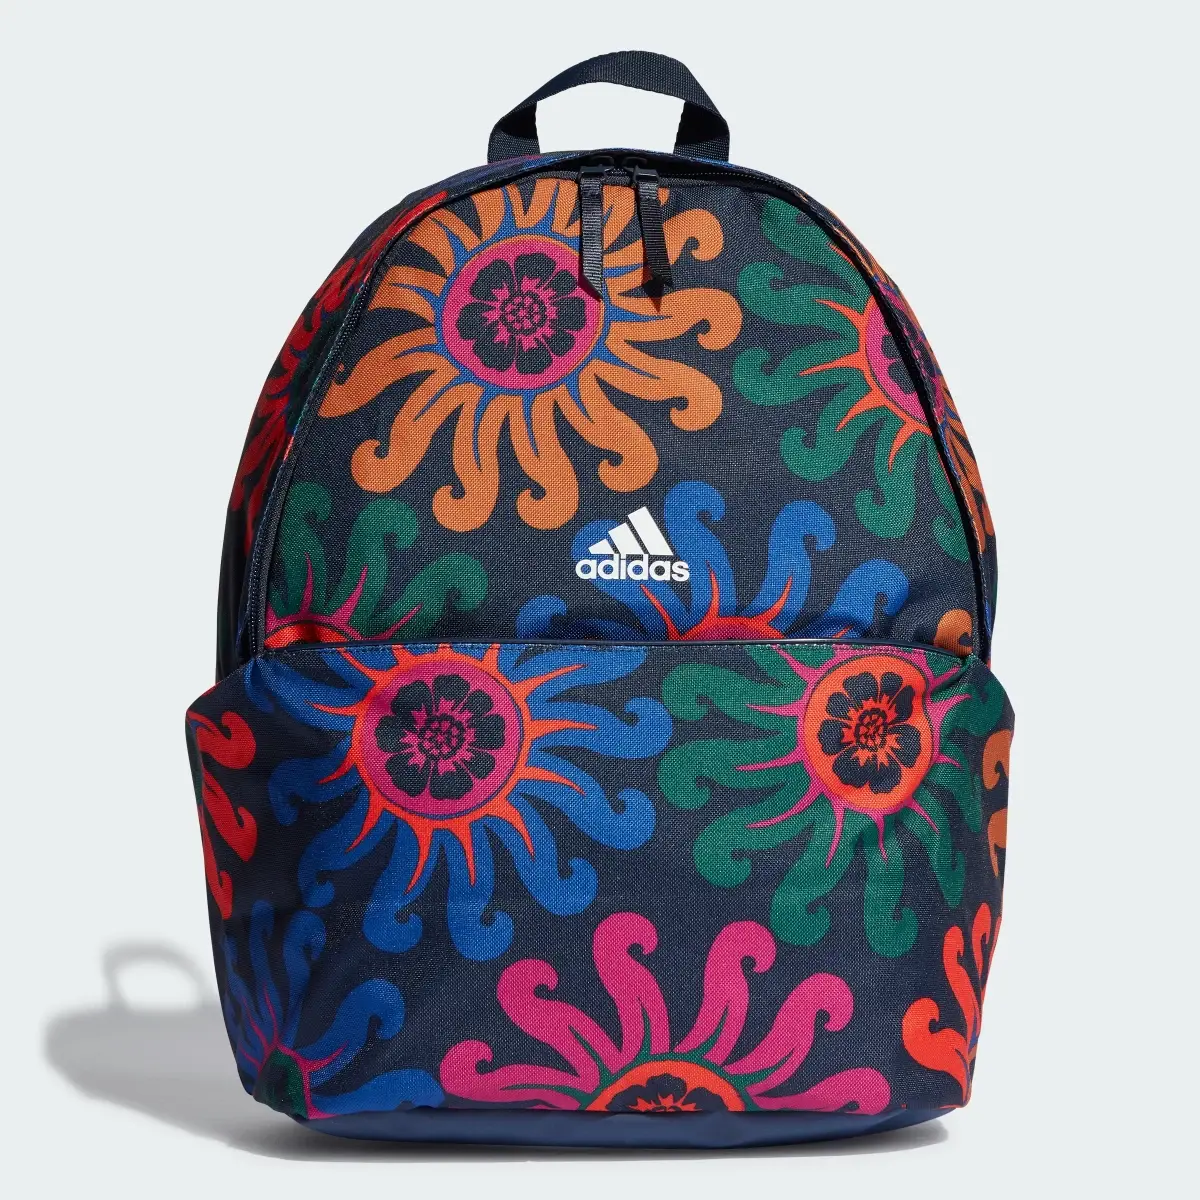 Adidas x FARM Backpack. 2